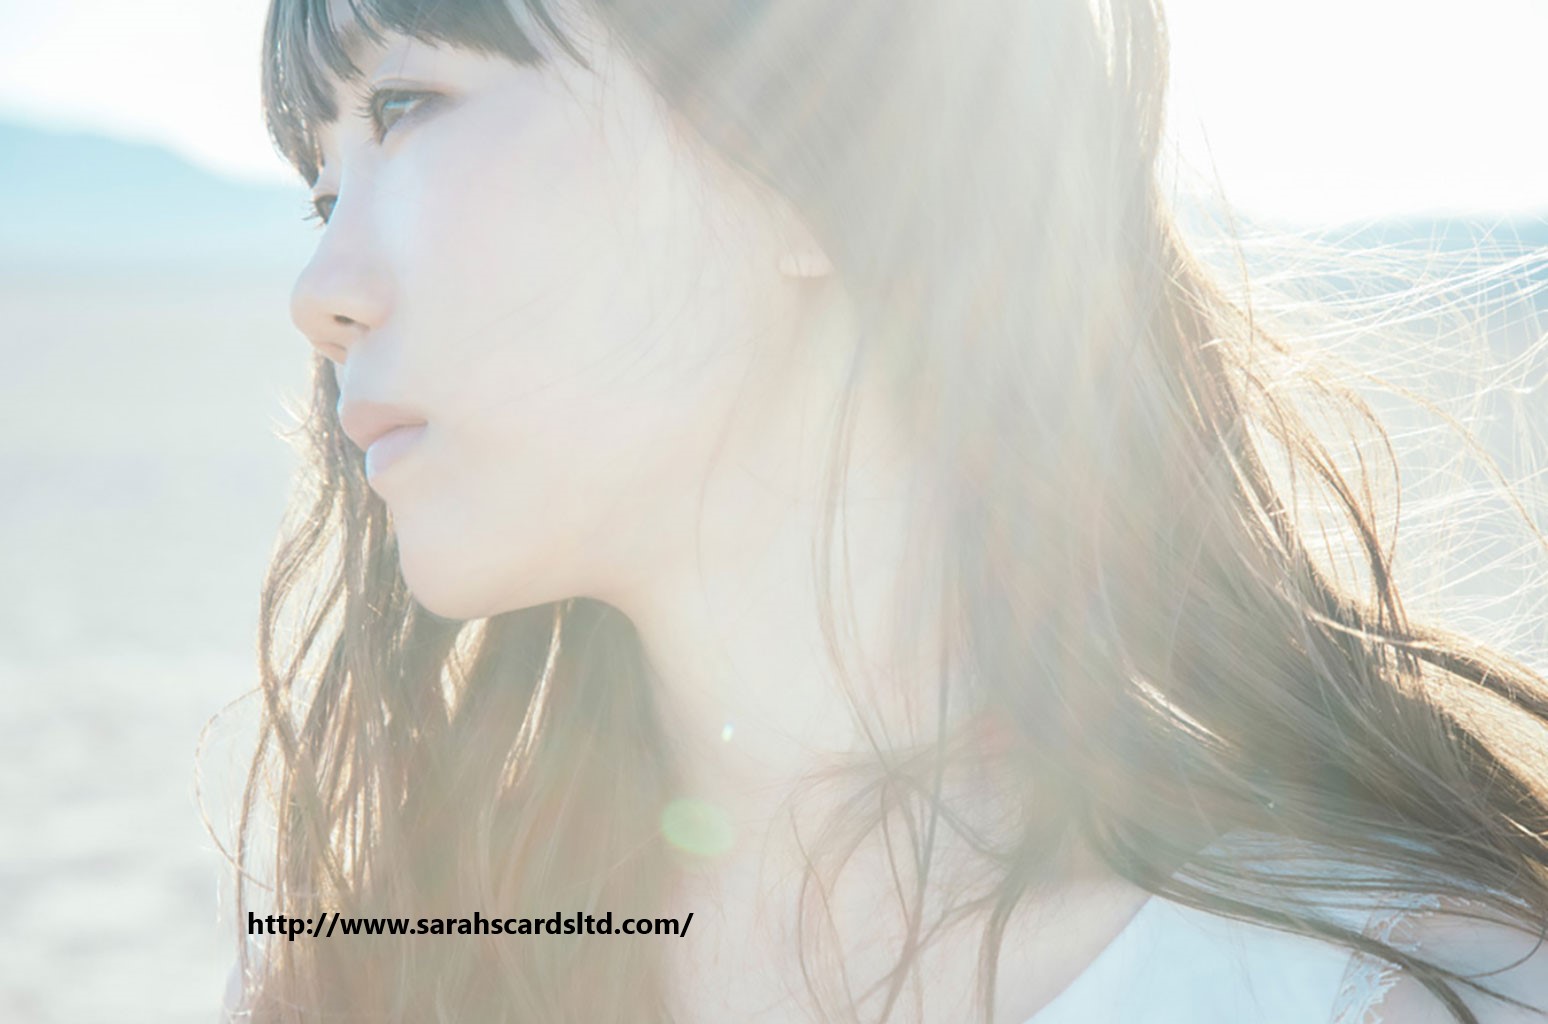 Biografi Aimer, Penyanyi Wanita Asal Jepang